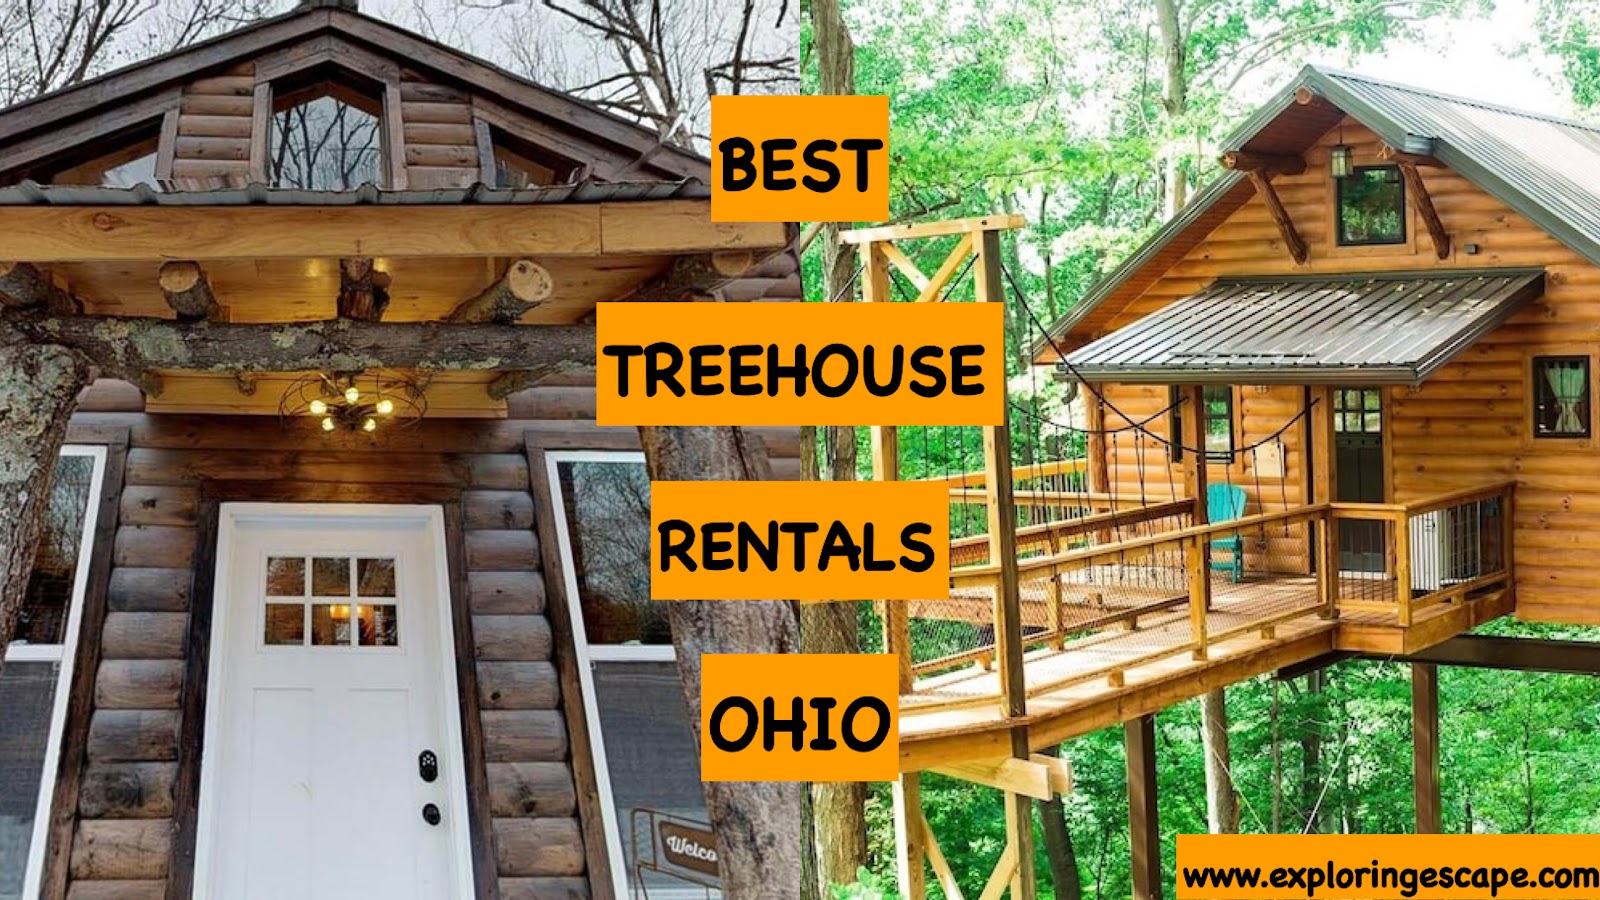 Treehouse Rentals in Ohio